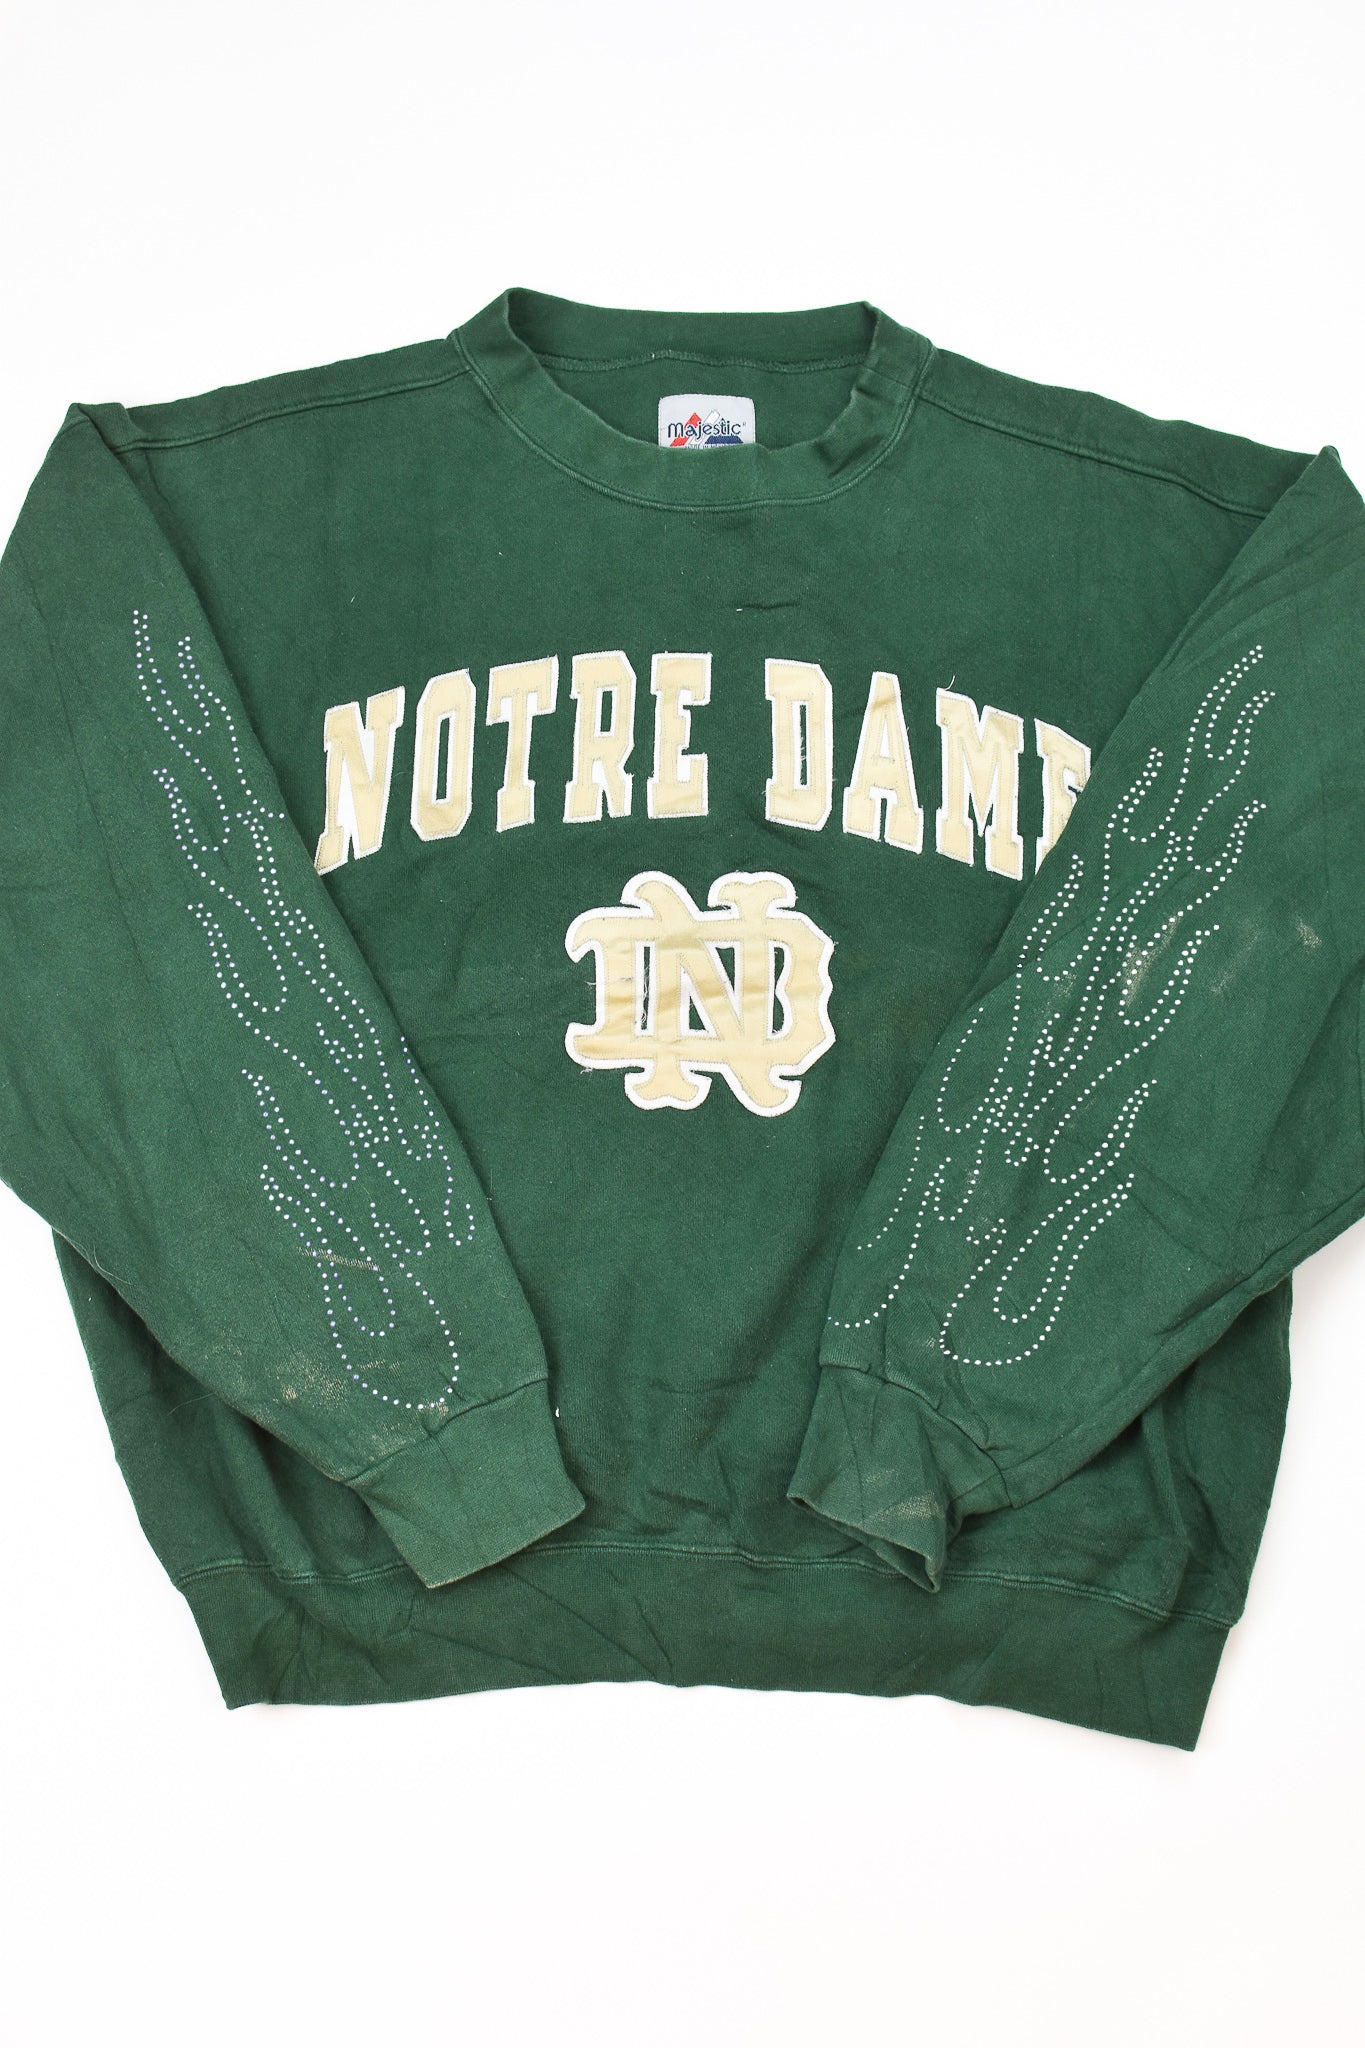 Upcycled Vintage Notre Dame Flame Sweatshirt